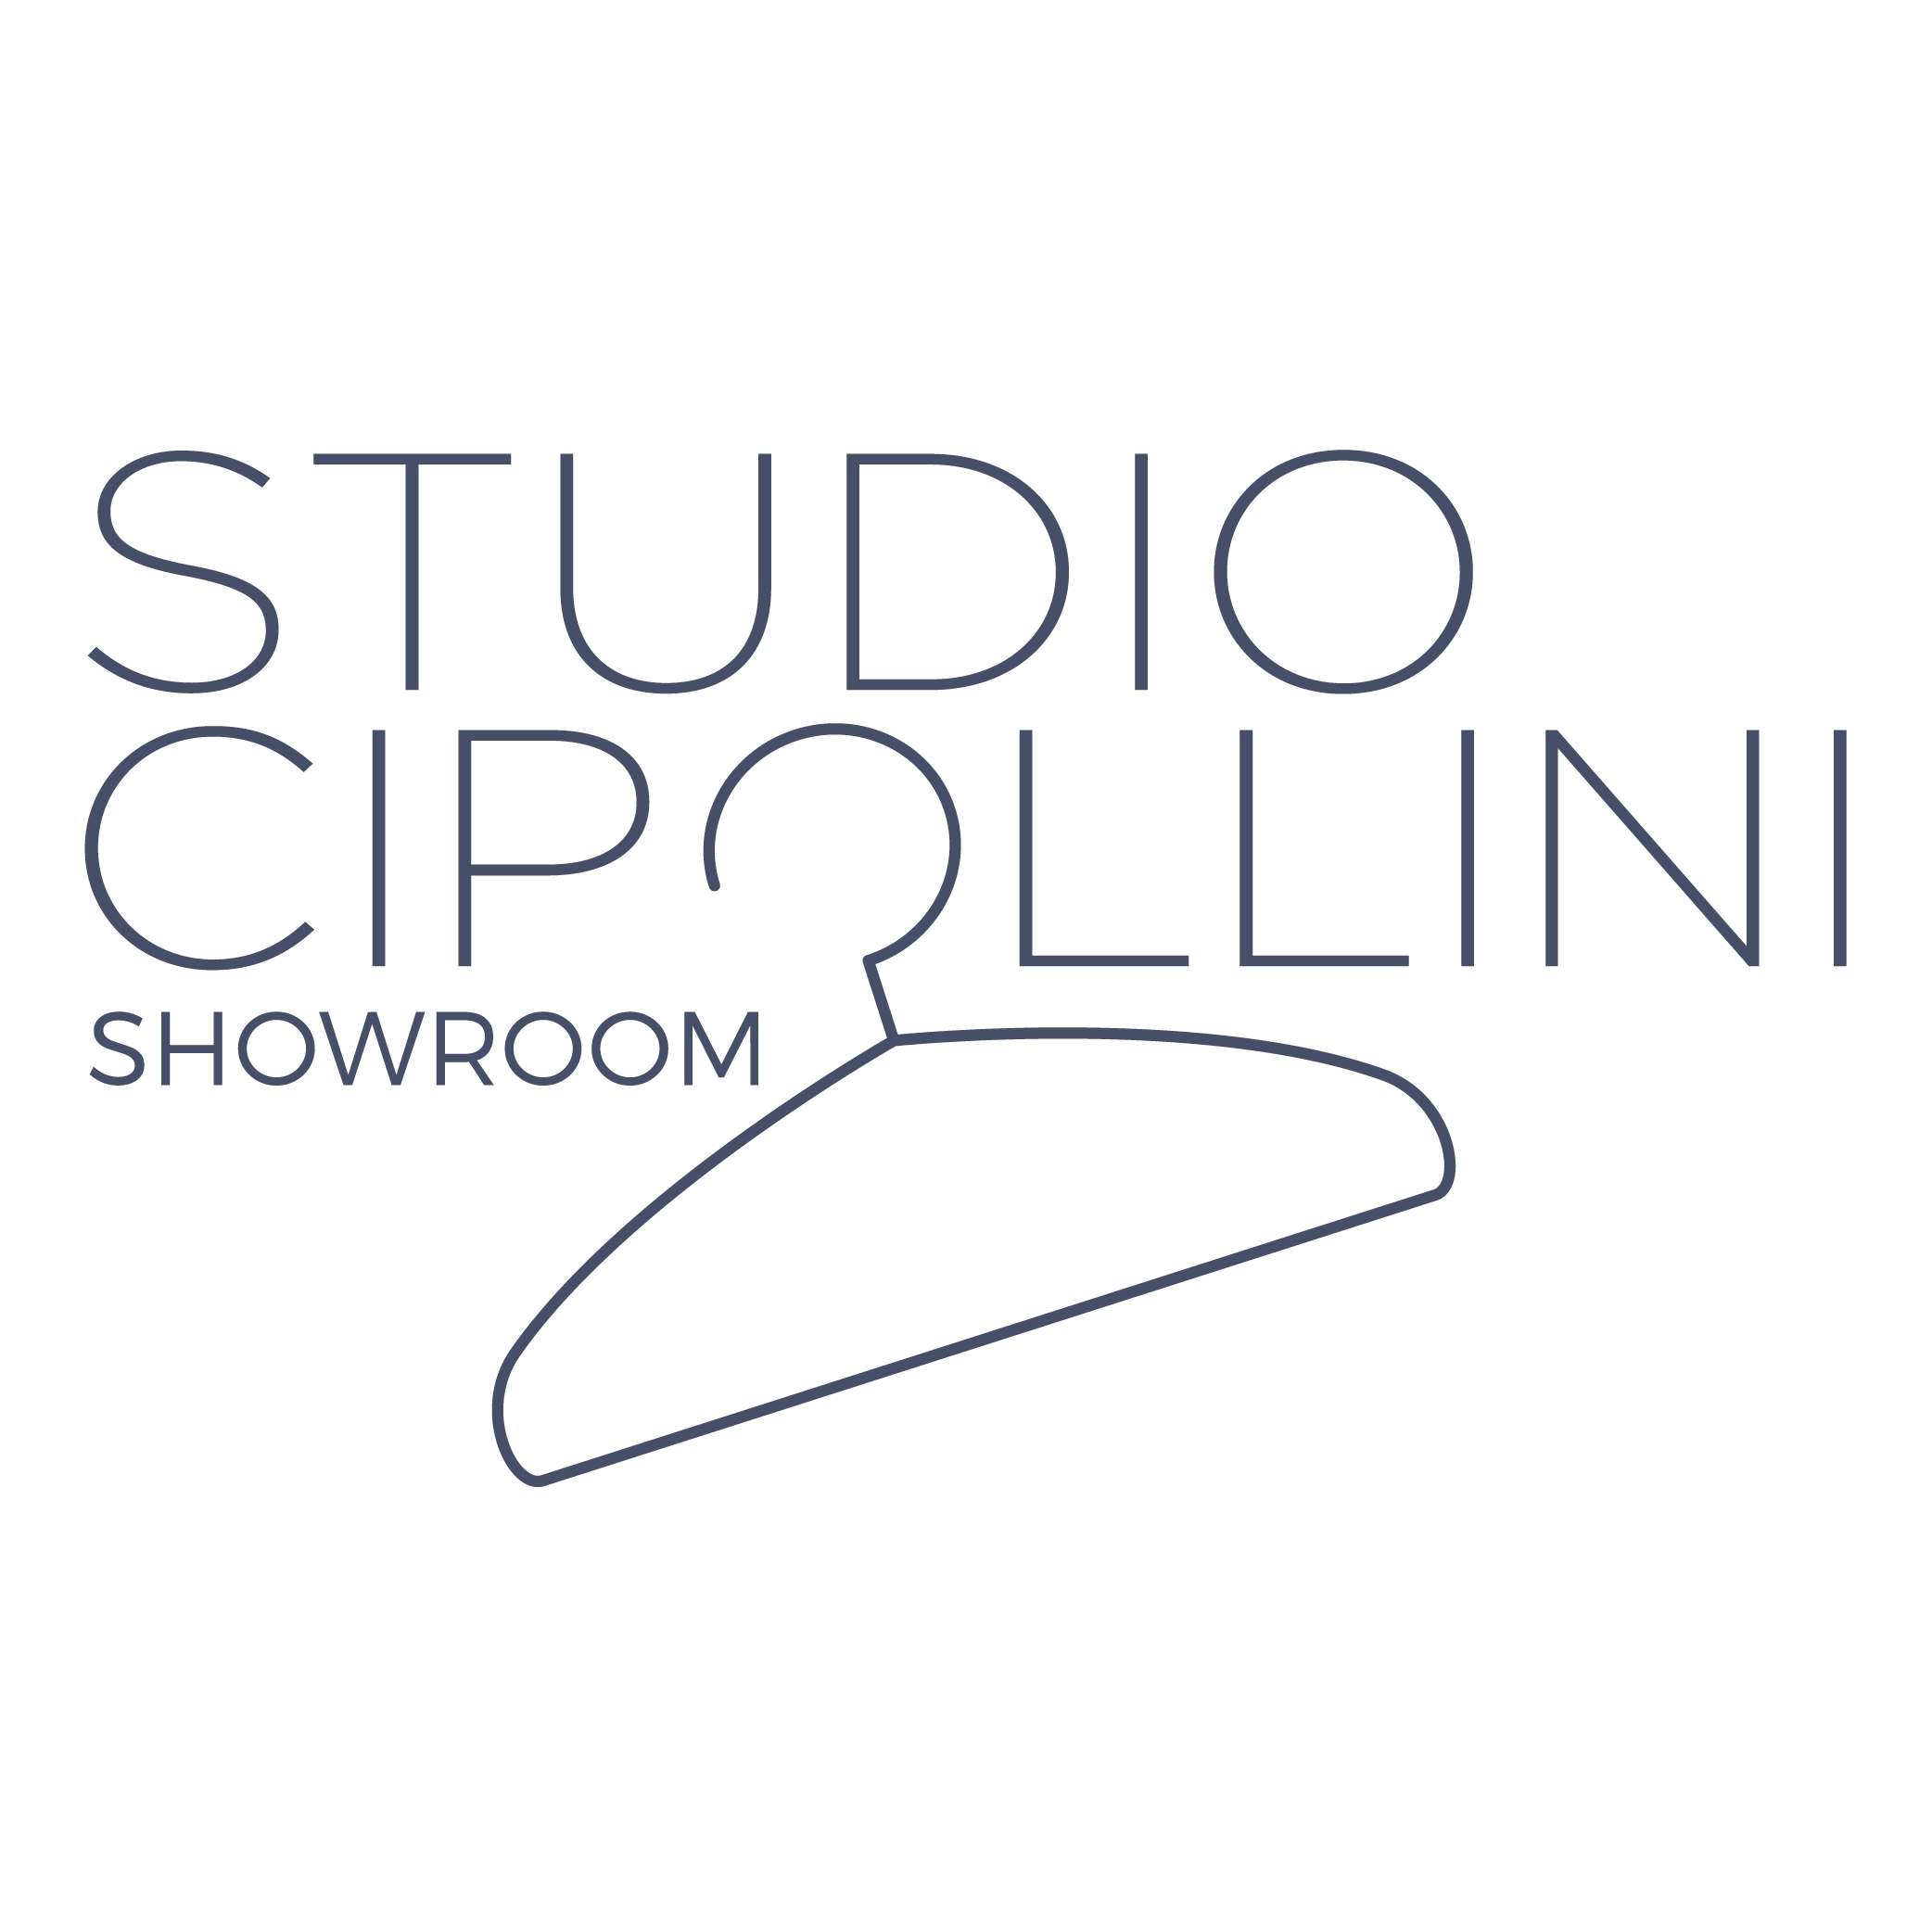 Studio Cipollini